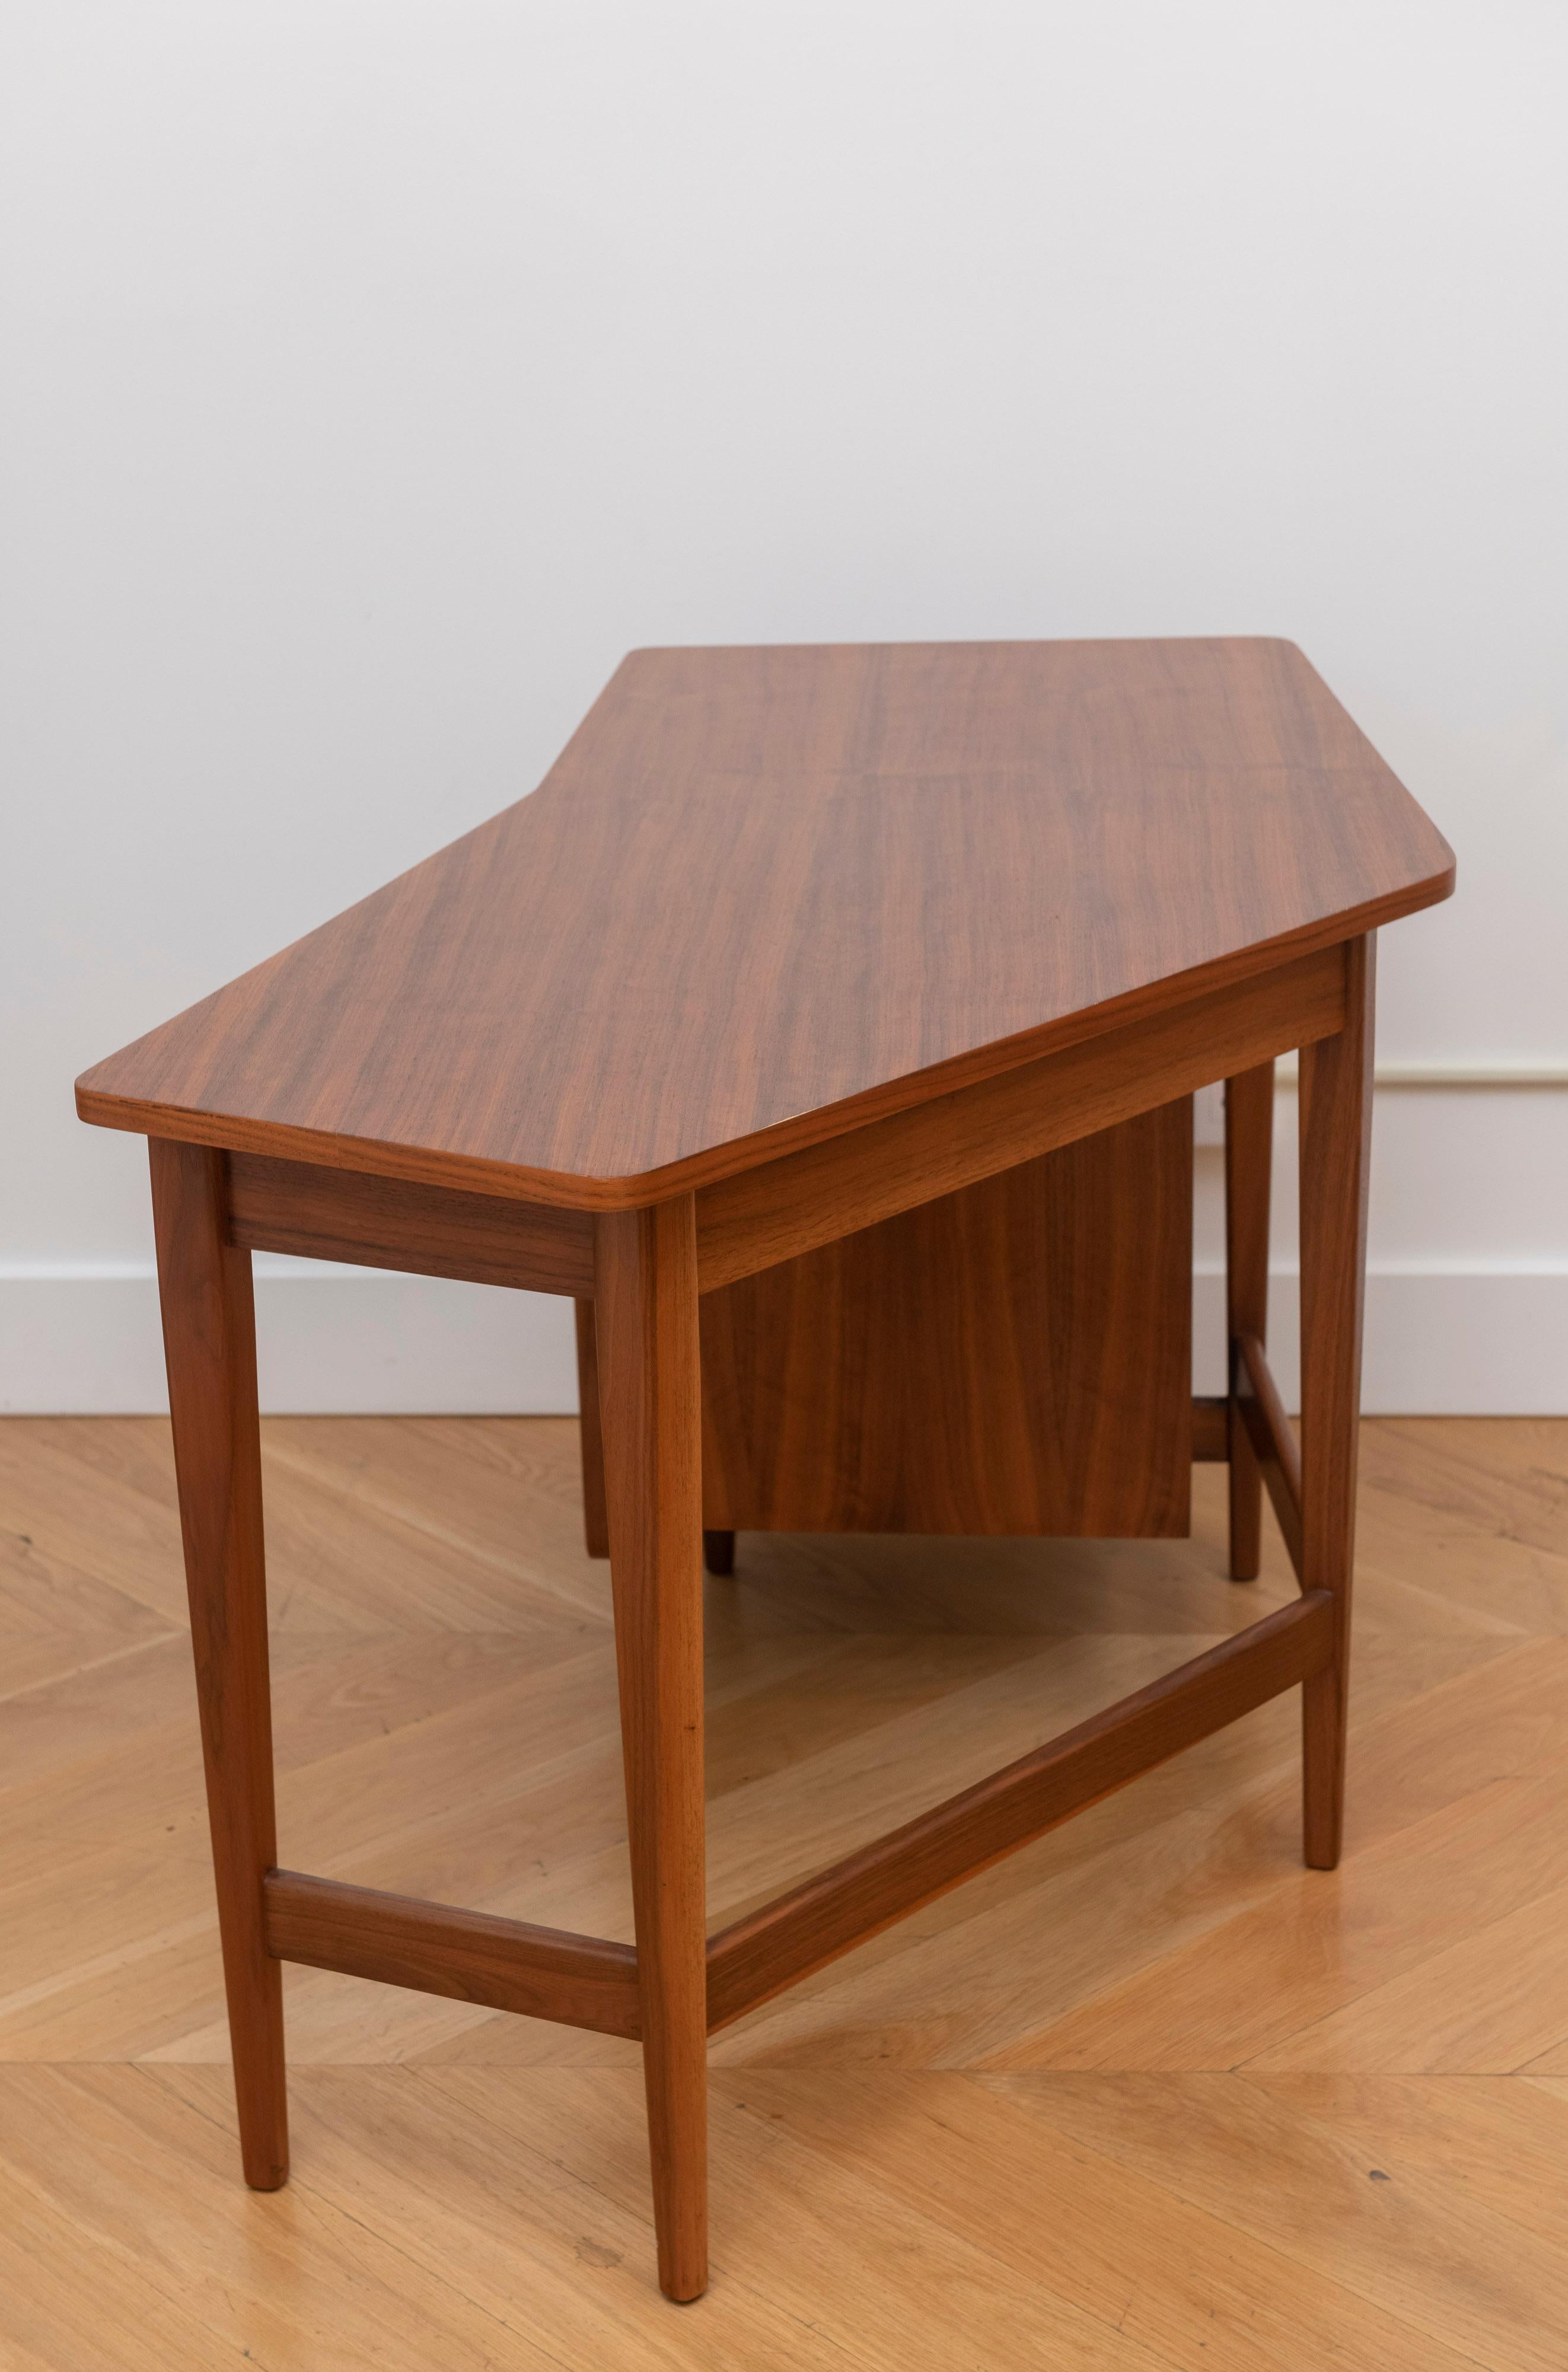 Mid-20th Century Elegant Modern Desk, Designed by Bertha Schaefer for Singer and Sons, circa 1950 For Sale